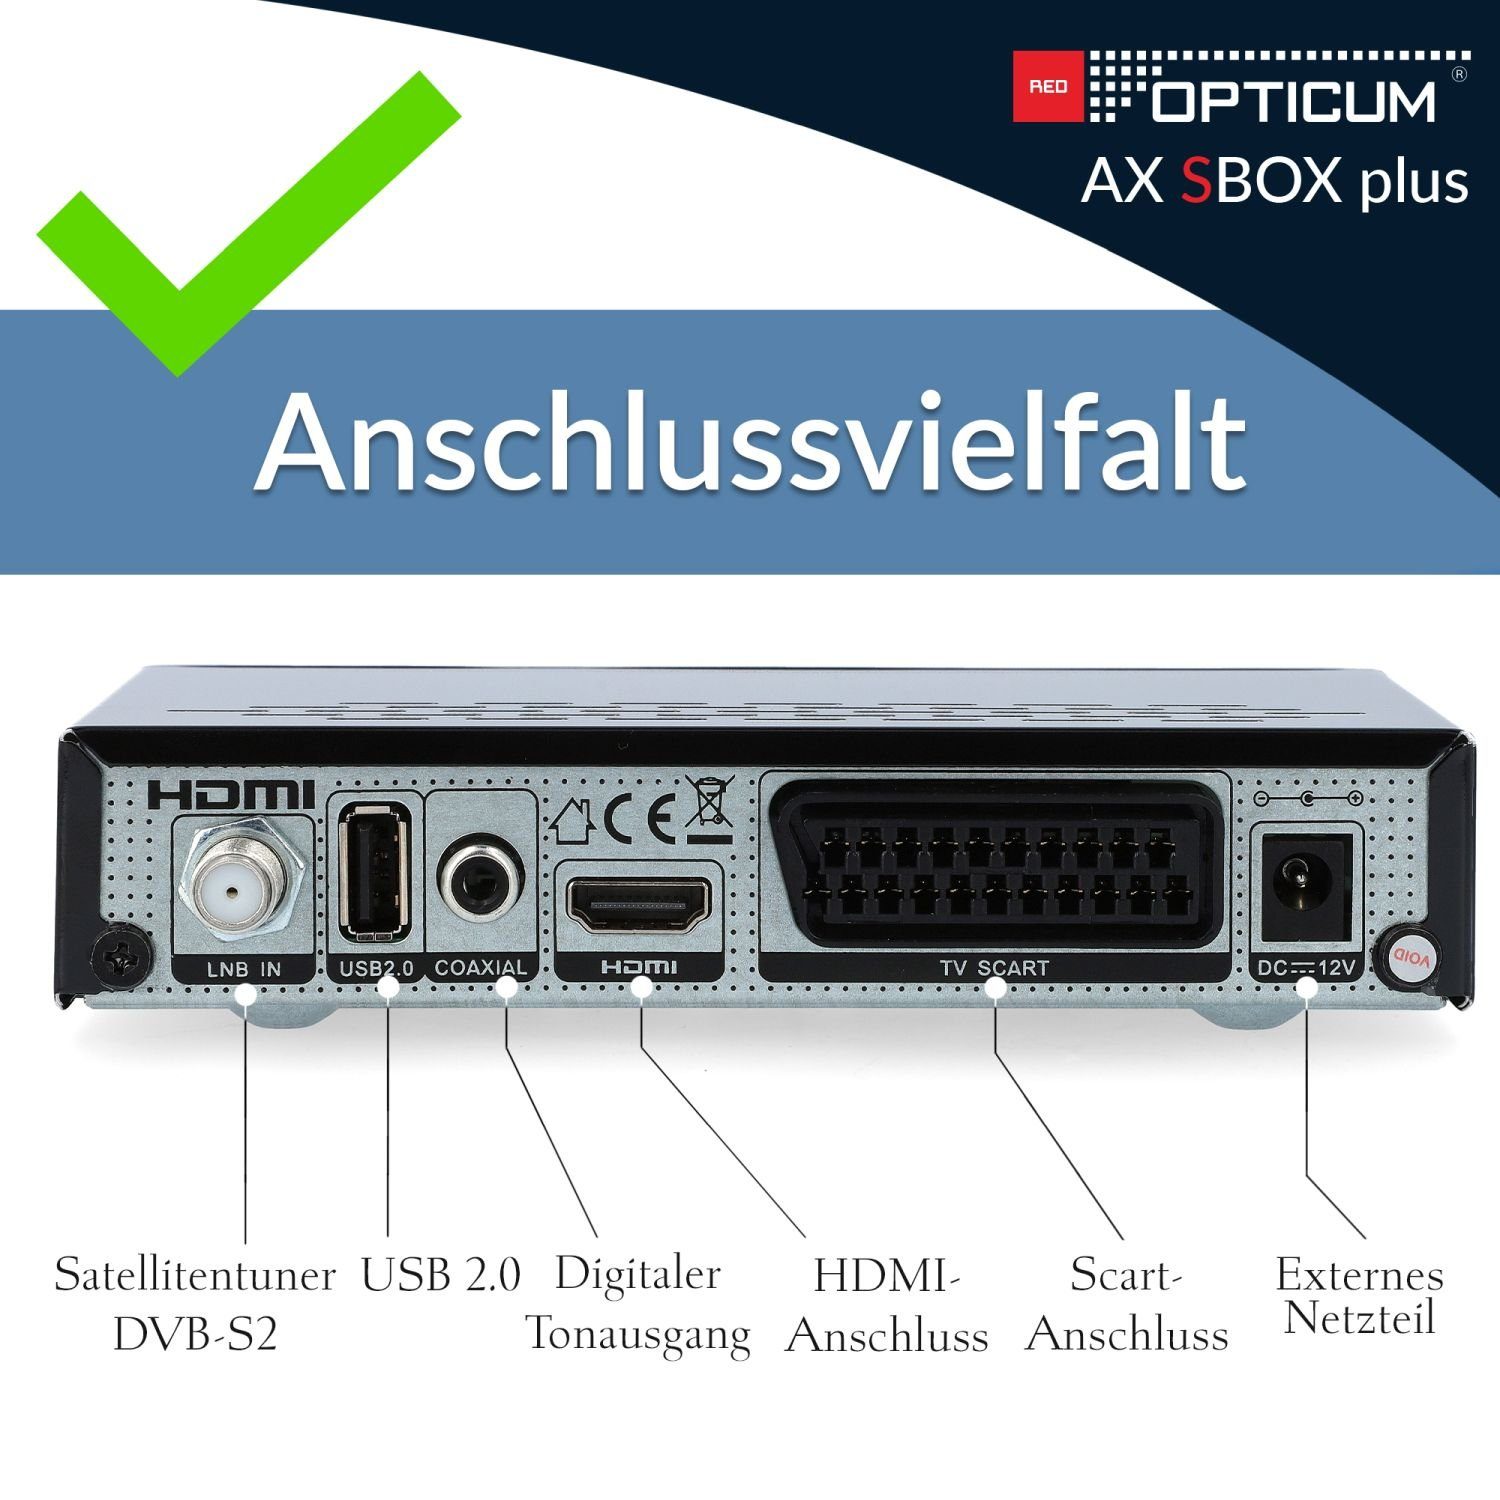 RED OPTICUM - PVR & SCART, HDMI SBOX Unicable USB, Coaxial tauglich) mit Kabel Plus + SAT-Receiver (PVR, Aufnahmefunktion HDMI, Timeshift